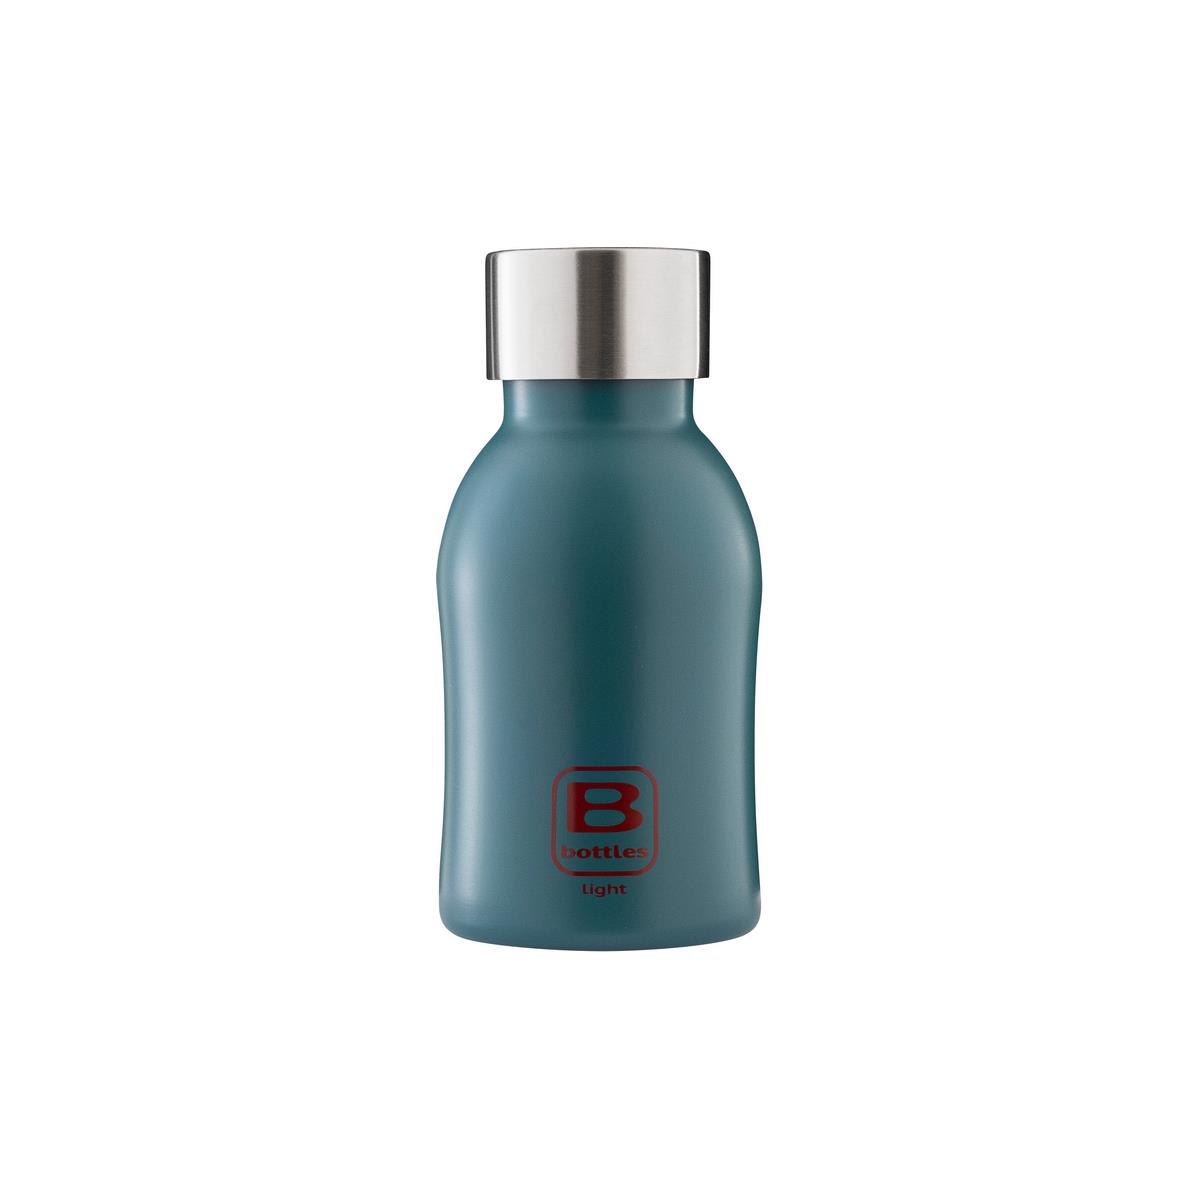 photo B Bottles Light - Teal Blue - 350 ml - Ultra light and compact 18/10 stainless steel bottle